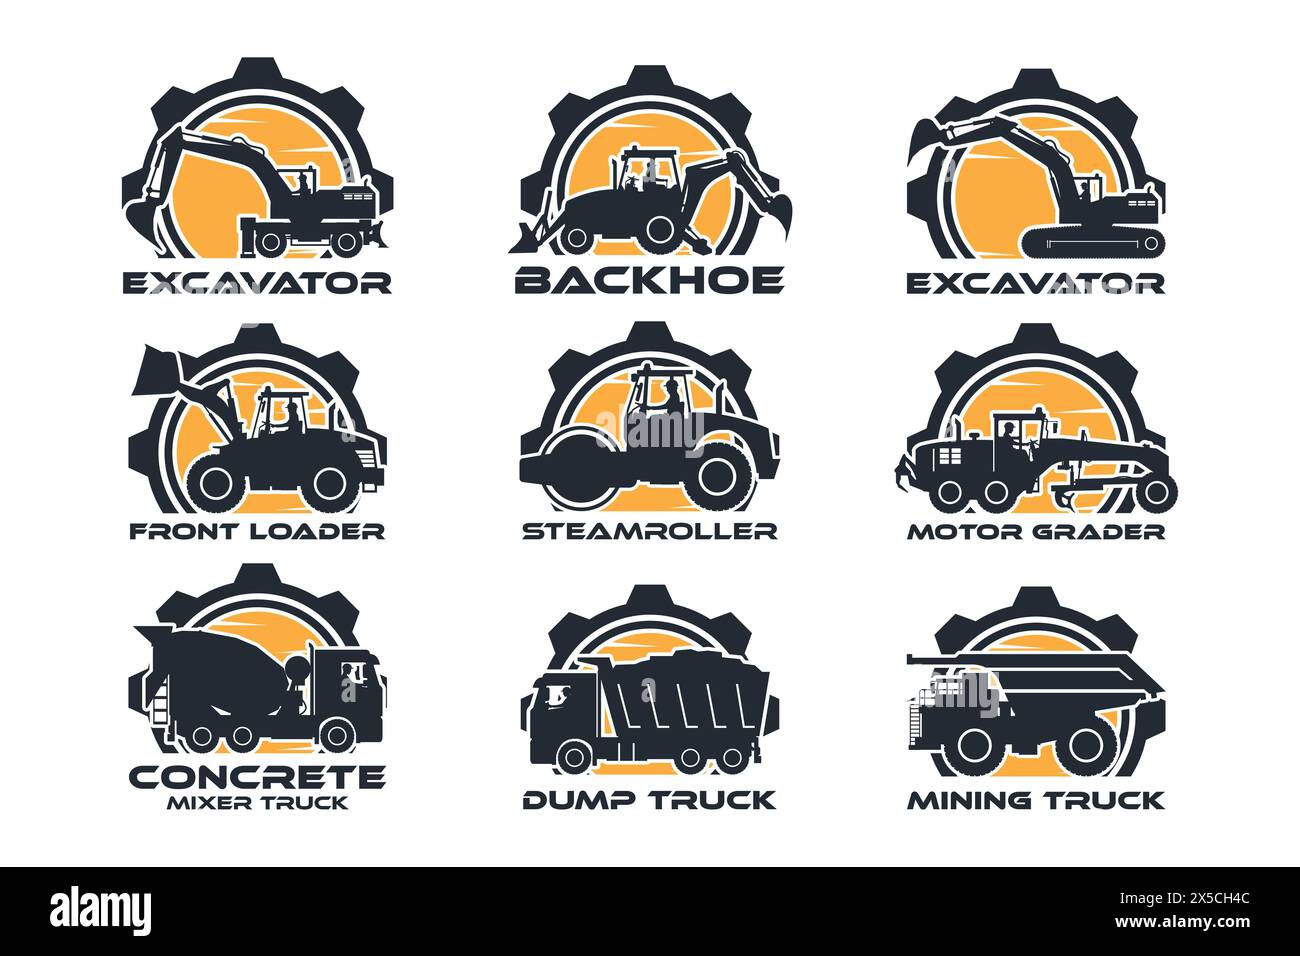 Heavy machinery label logo, excavator, backhoe, front loader, soil compactor, motor grader, concrete trucks, truck and mining truck Stock Vector